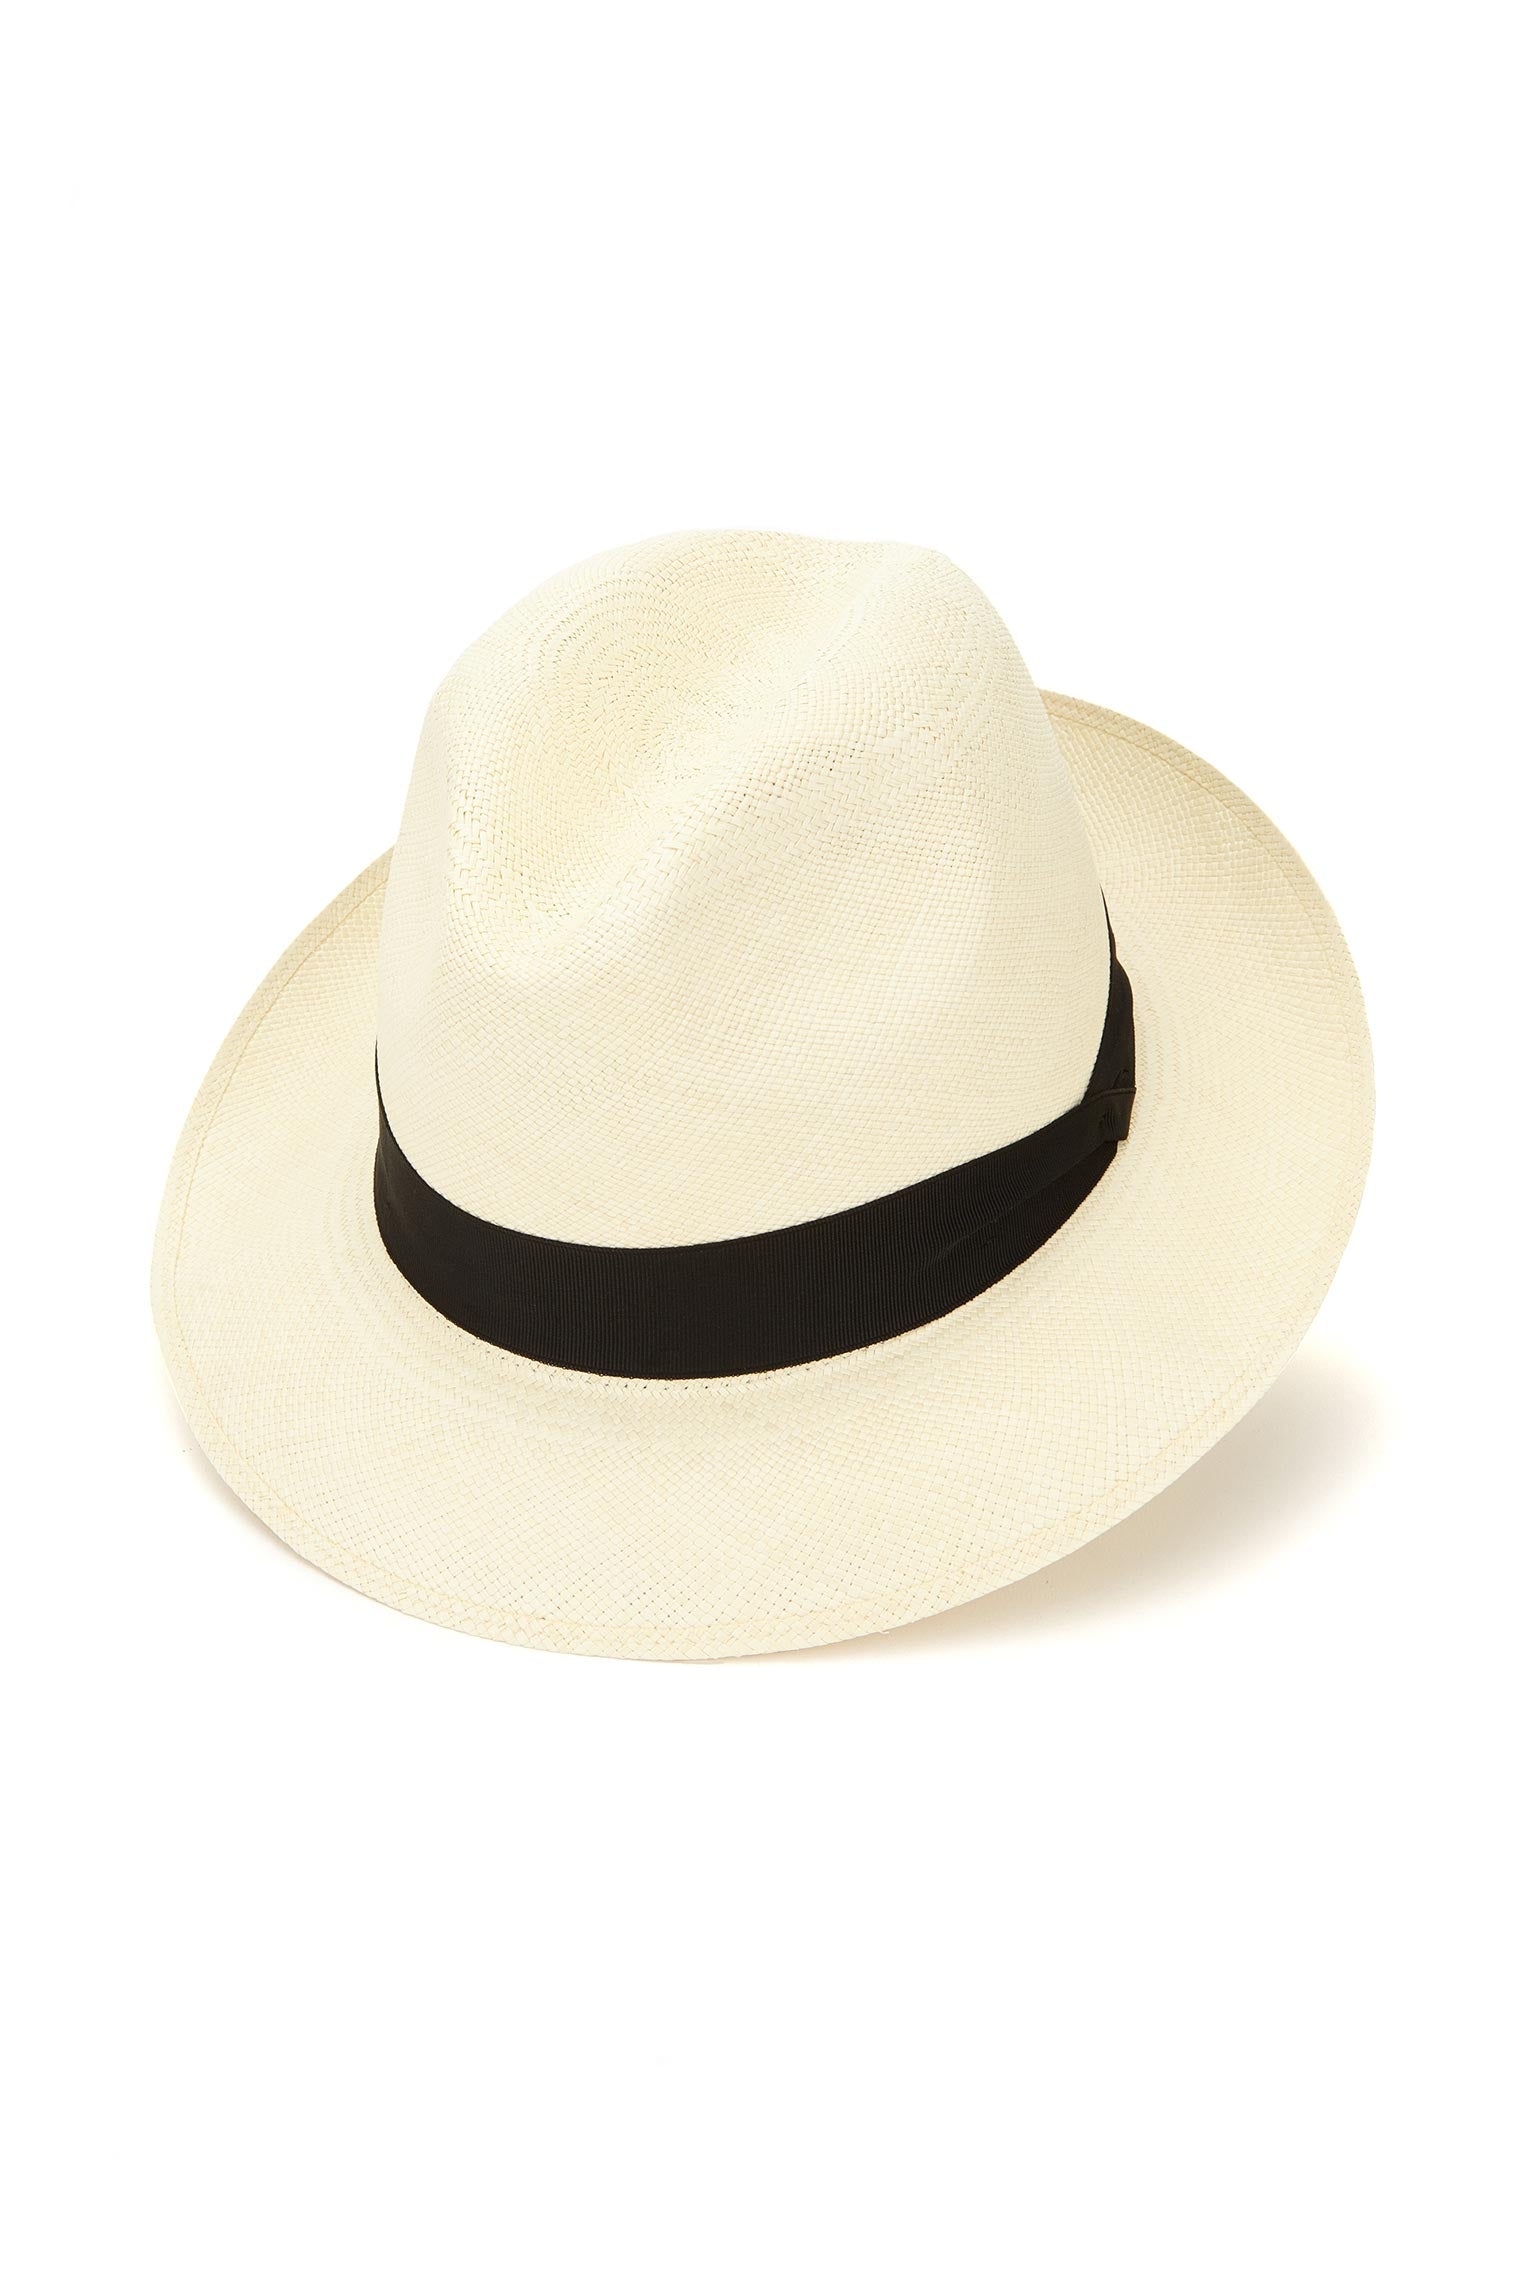 Classic Panama - Men's Hats - Lock & Co. Hatters London UK